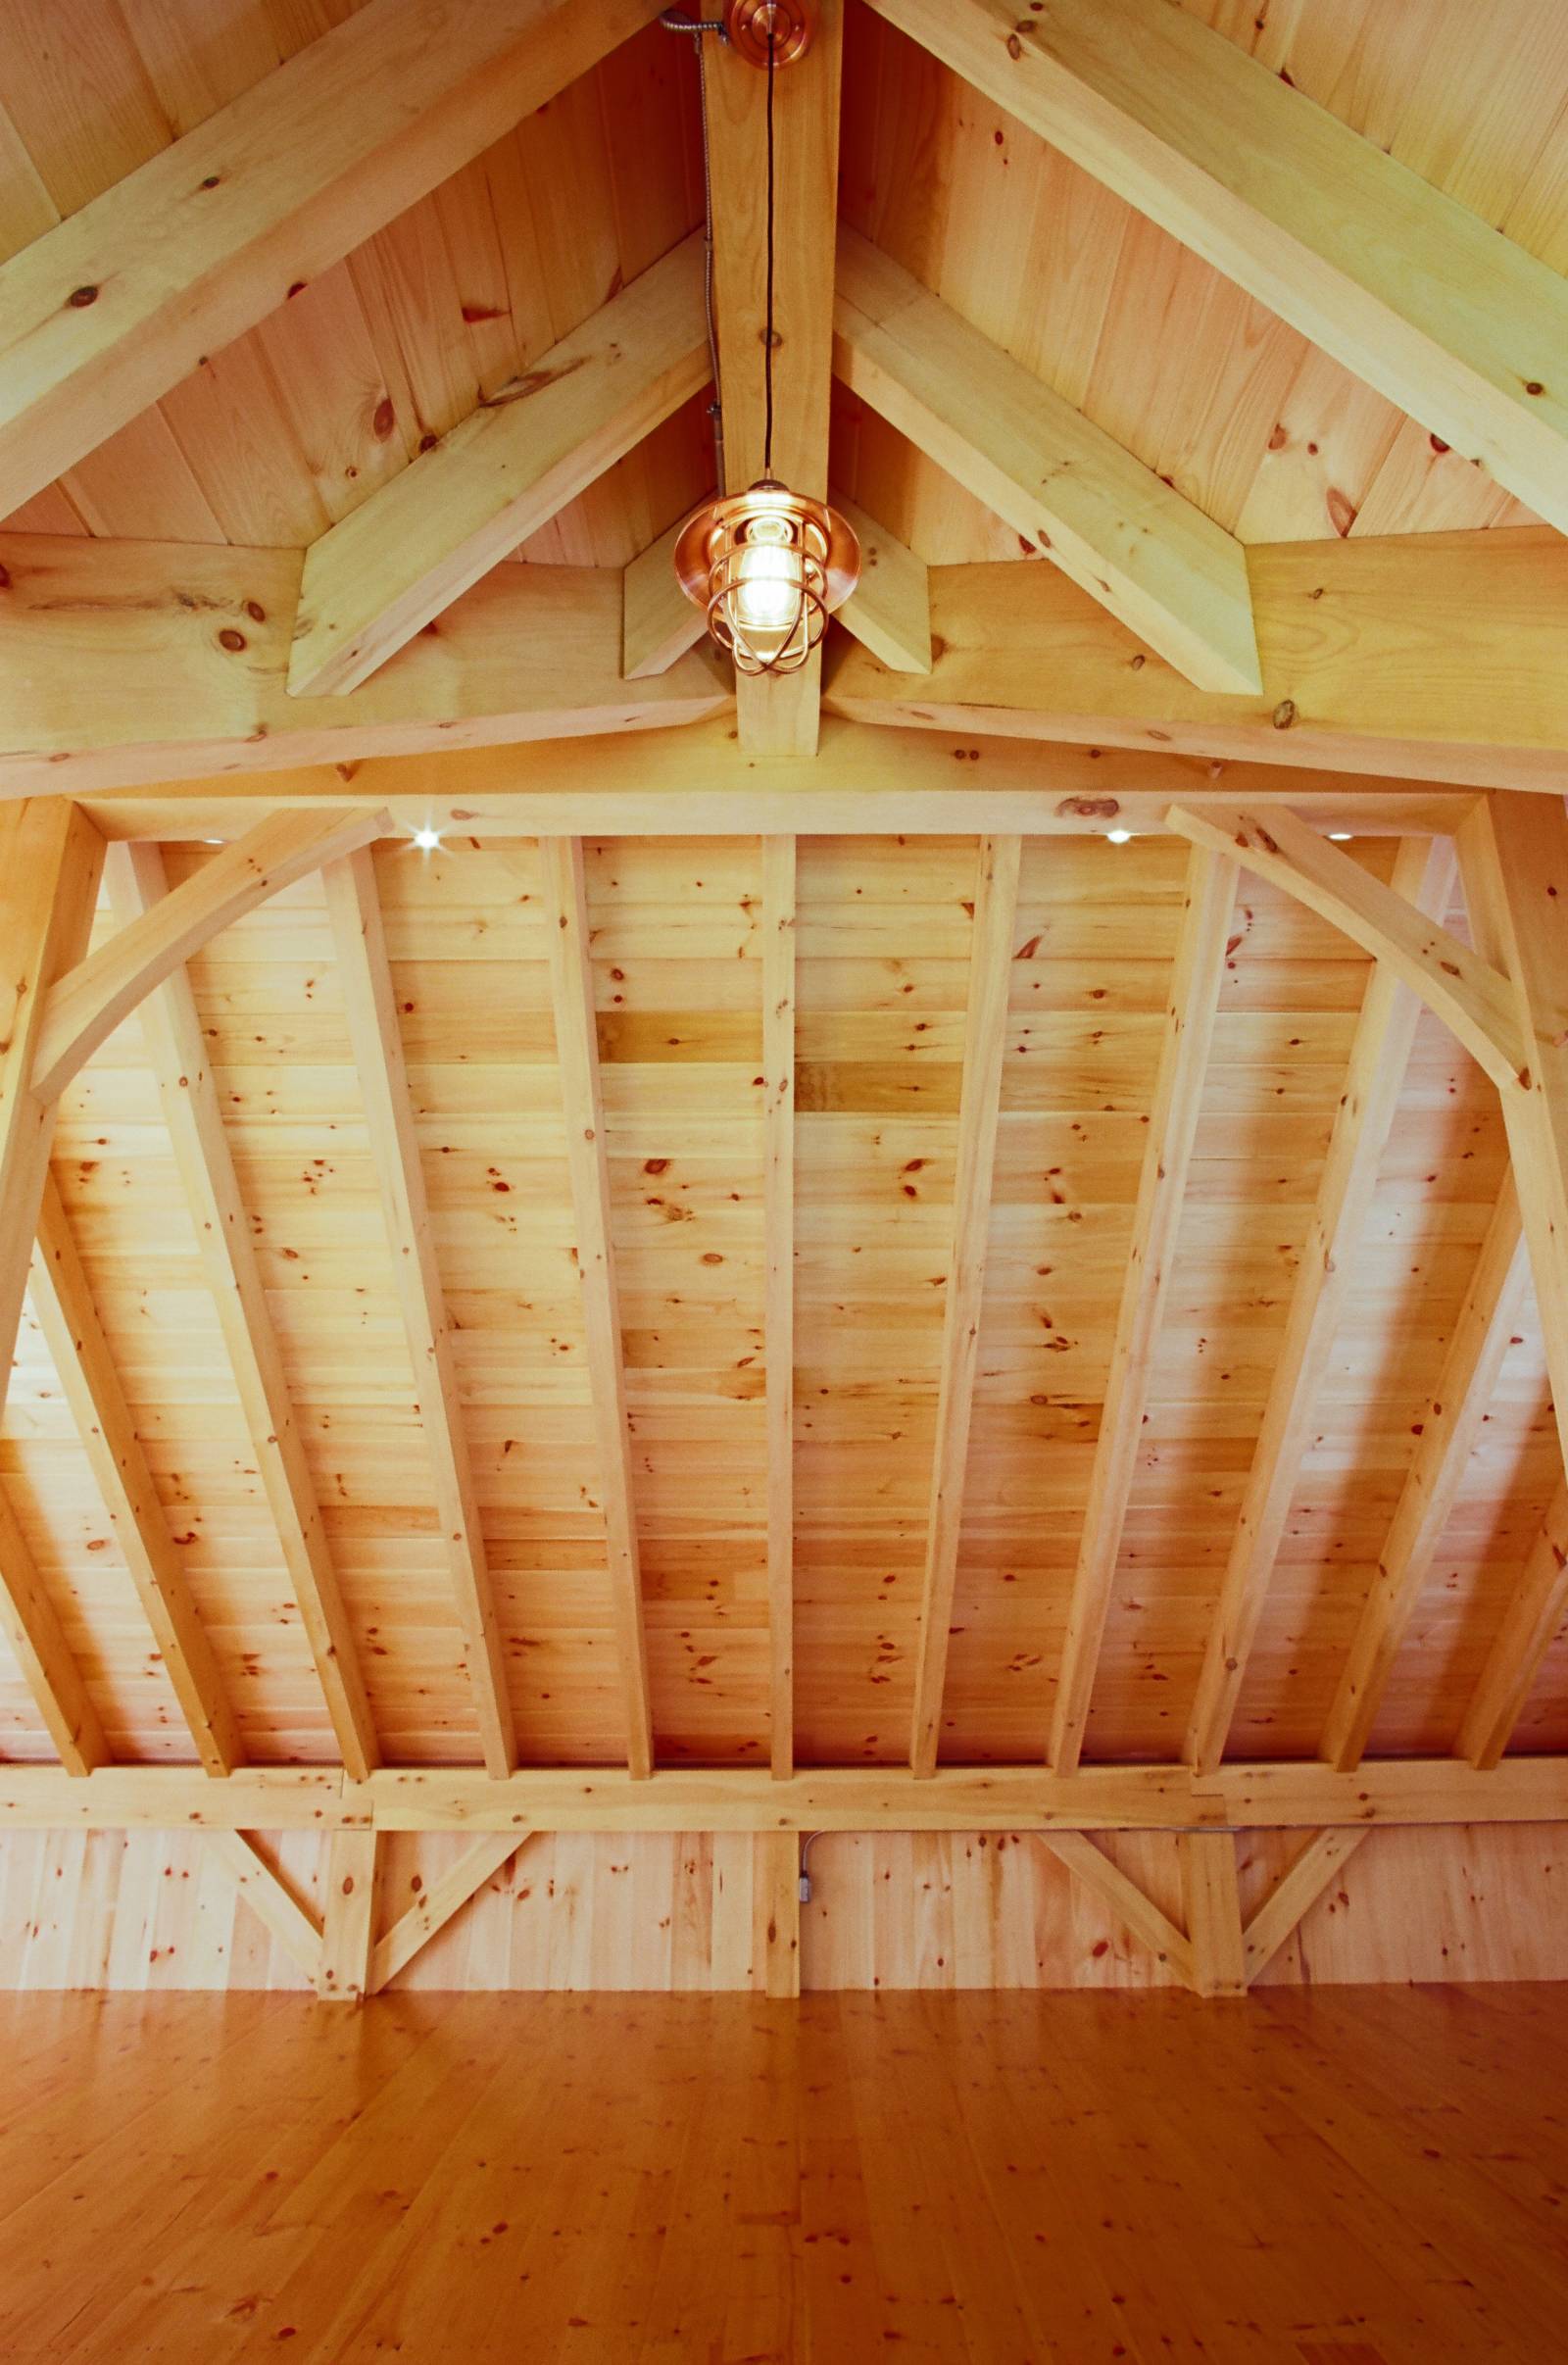 Inside reverse gable dormer showing authentic post & beam timber framing